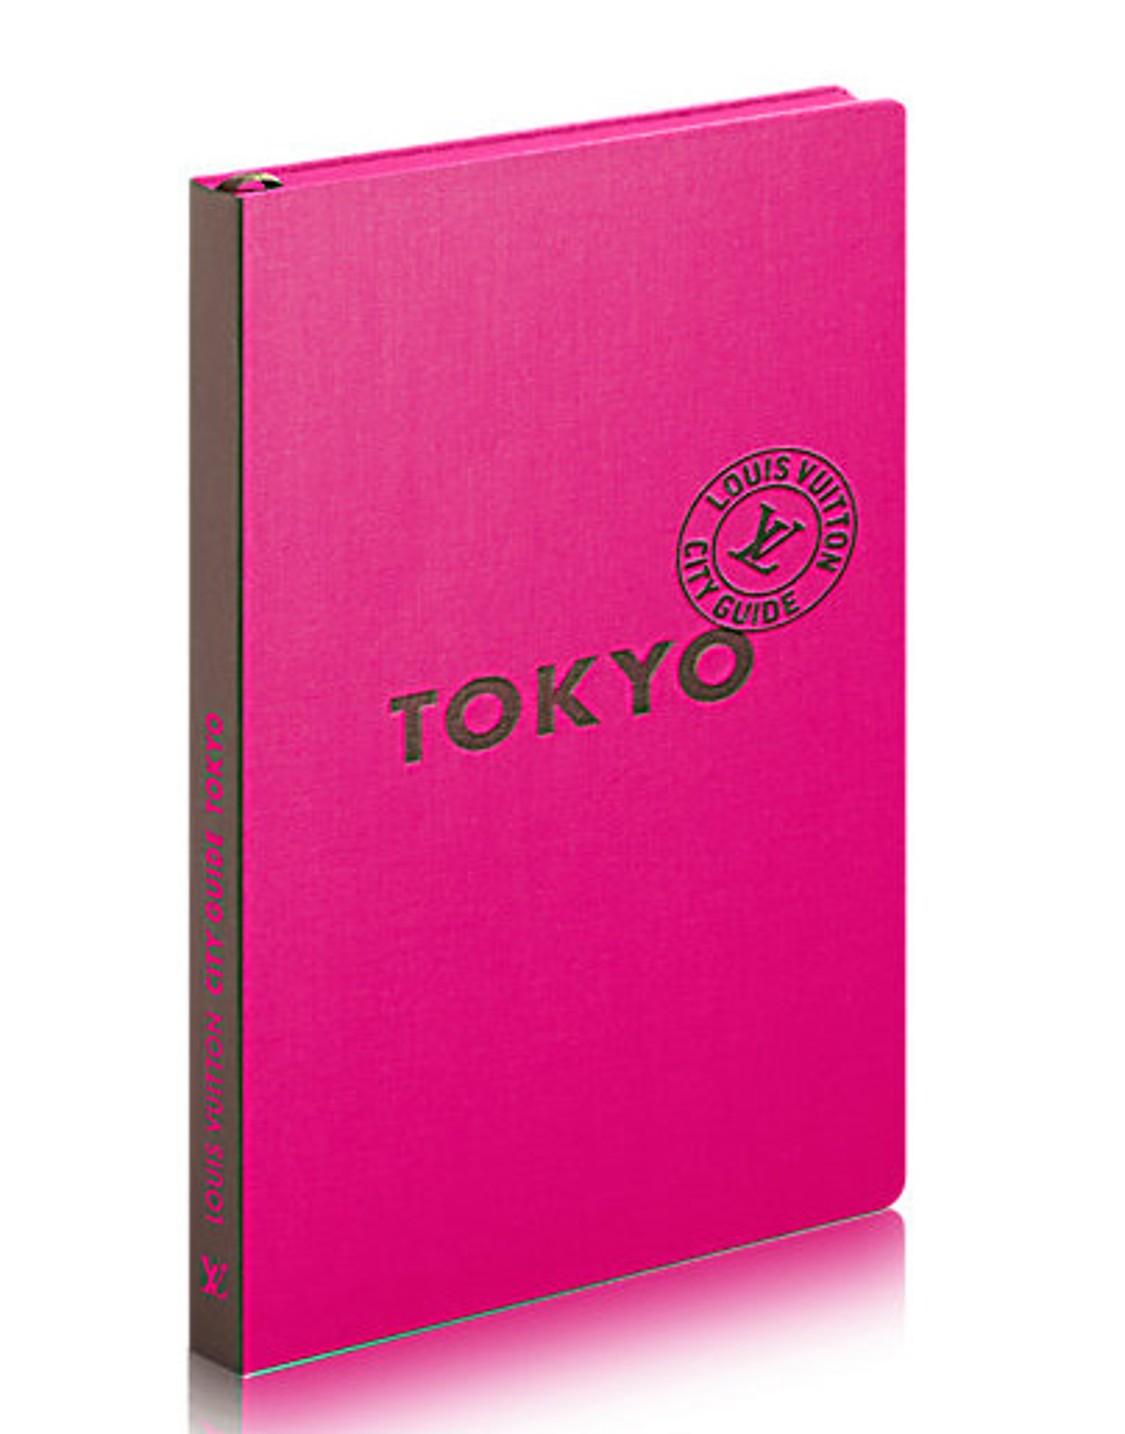 shop Louis Vuitton  Libri: Guida della città Louis Vuitton di Tokyo, in versione inglese. number 1107